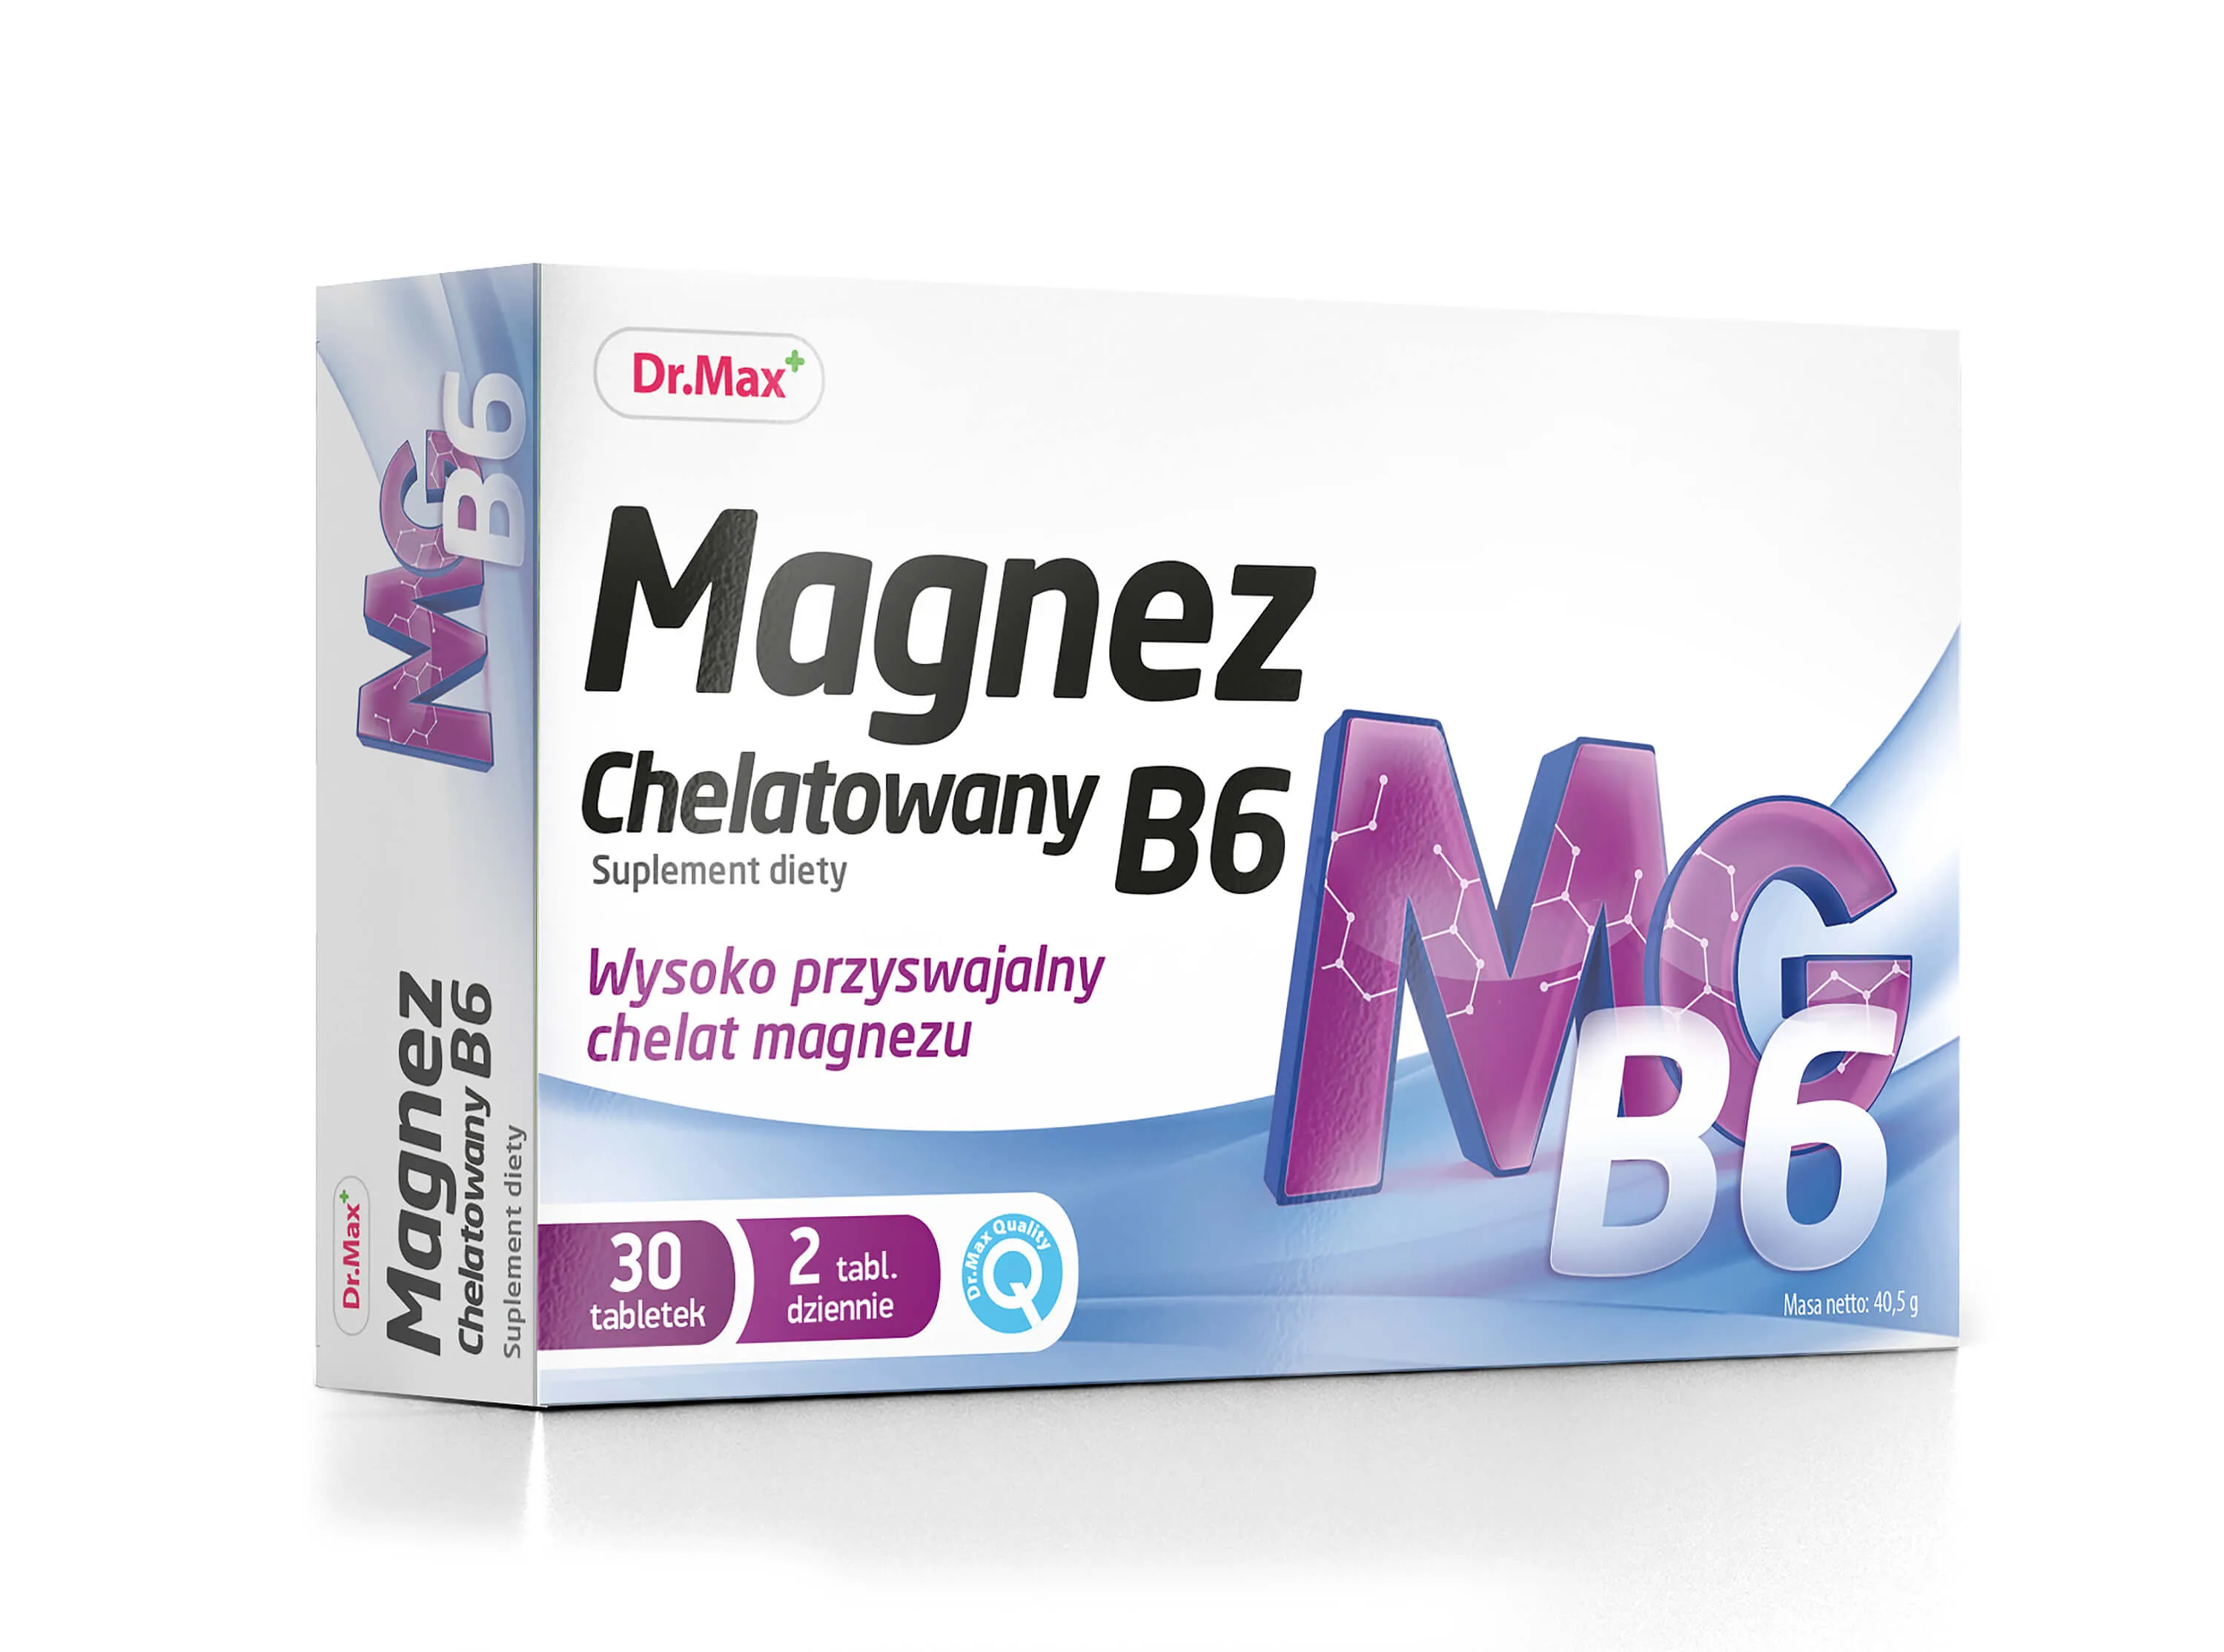 Magnez Chelatowany B6 Dr.Max, suplement diety, 30 tabletek